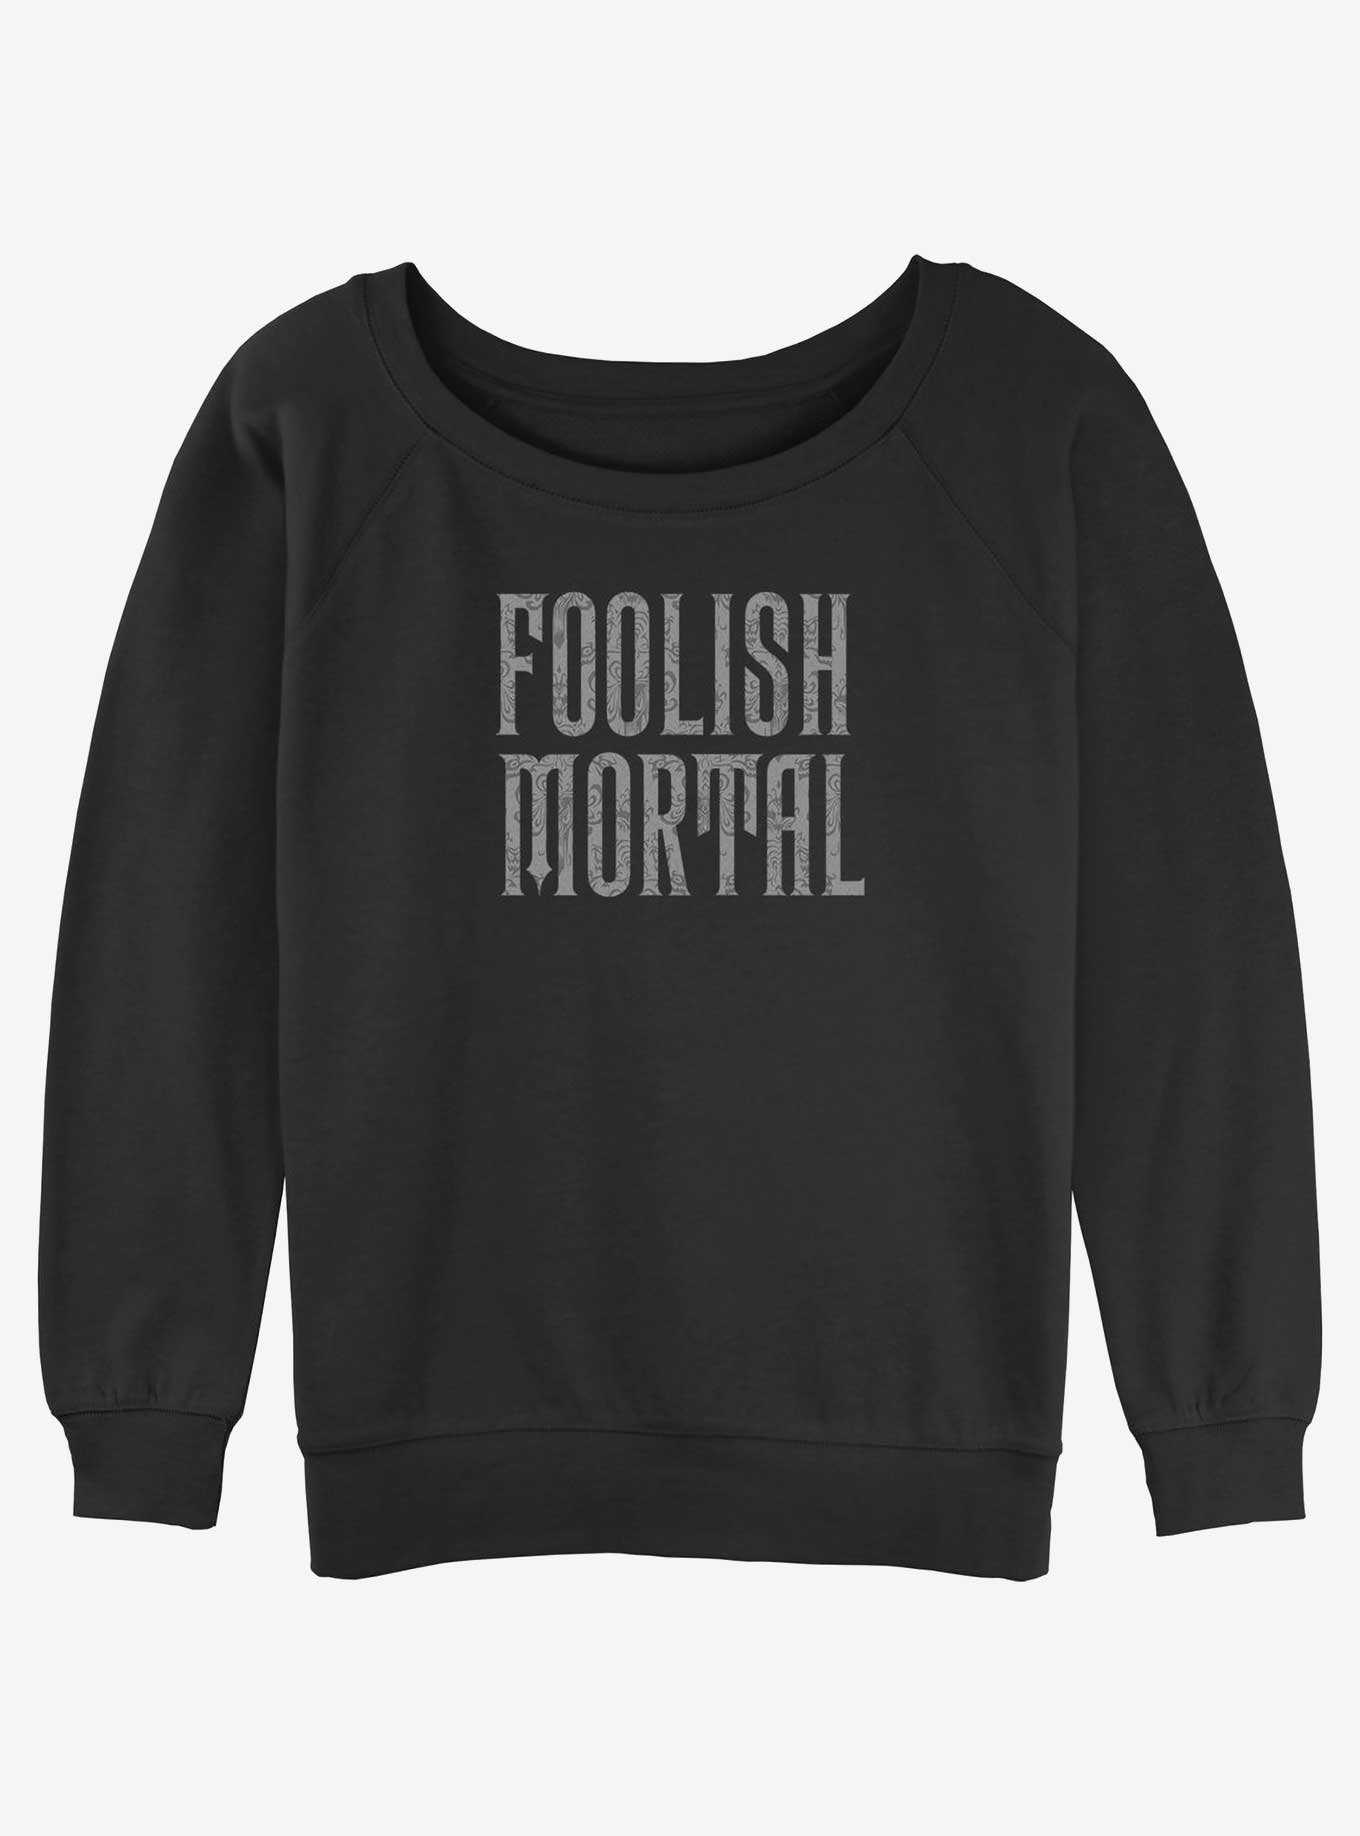 Disney Haunted Mansion Foolish Mortal Girls Slouchy Sweatshirt, , hi-res